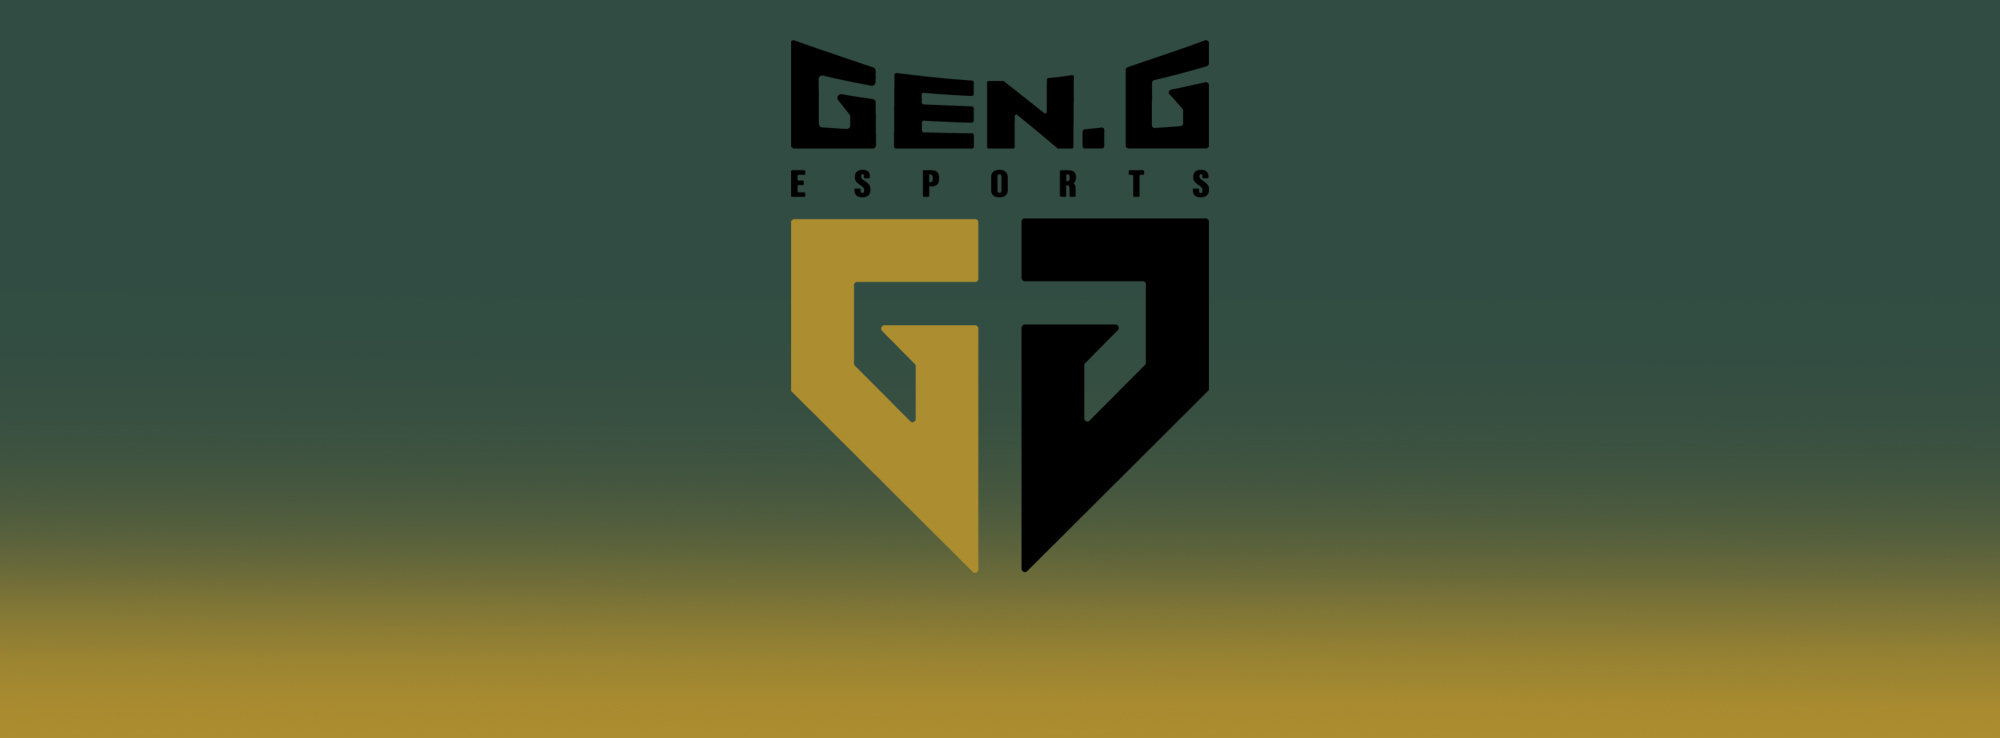 Esports Organization Gen.G Receives $46 Million From Investors Including Will Smith